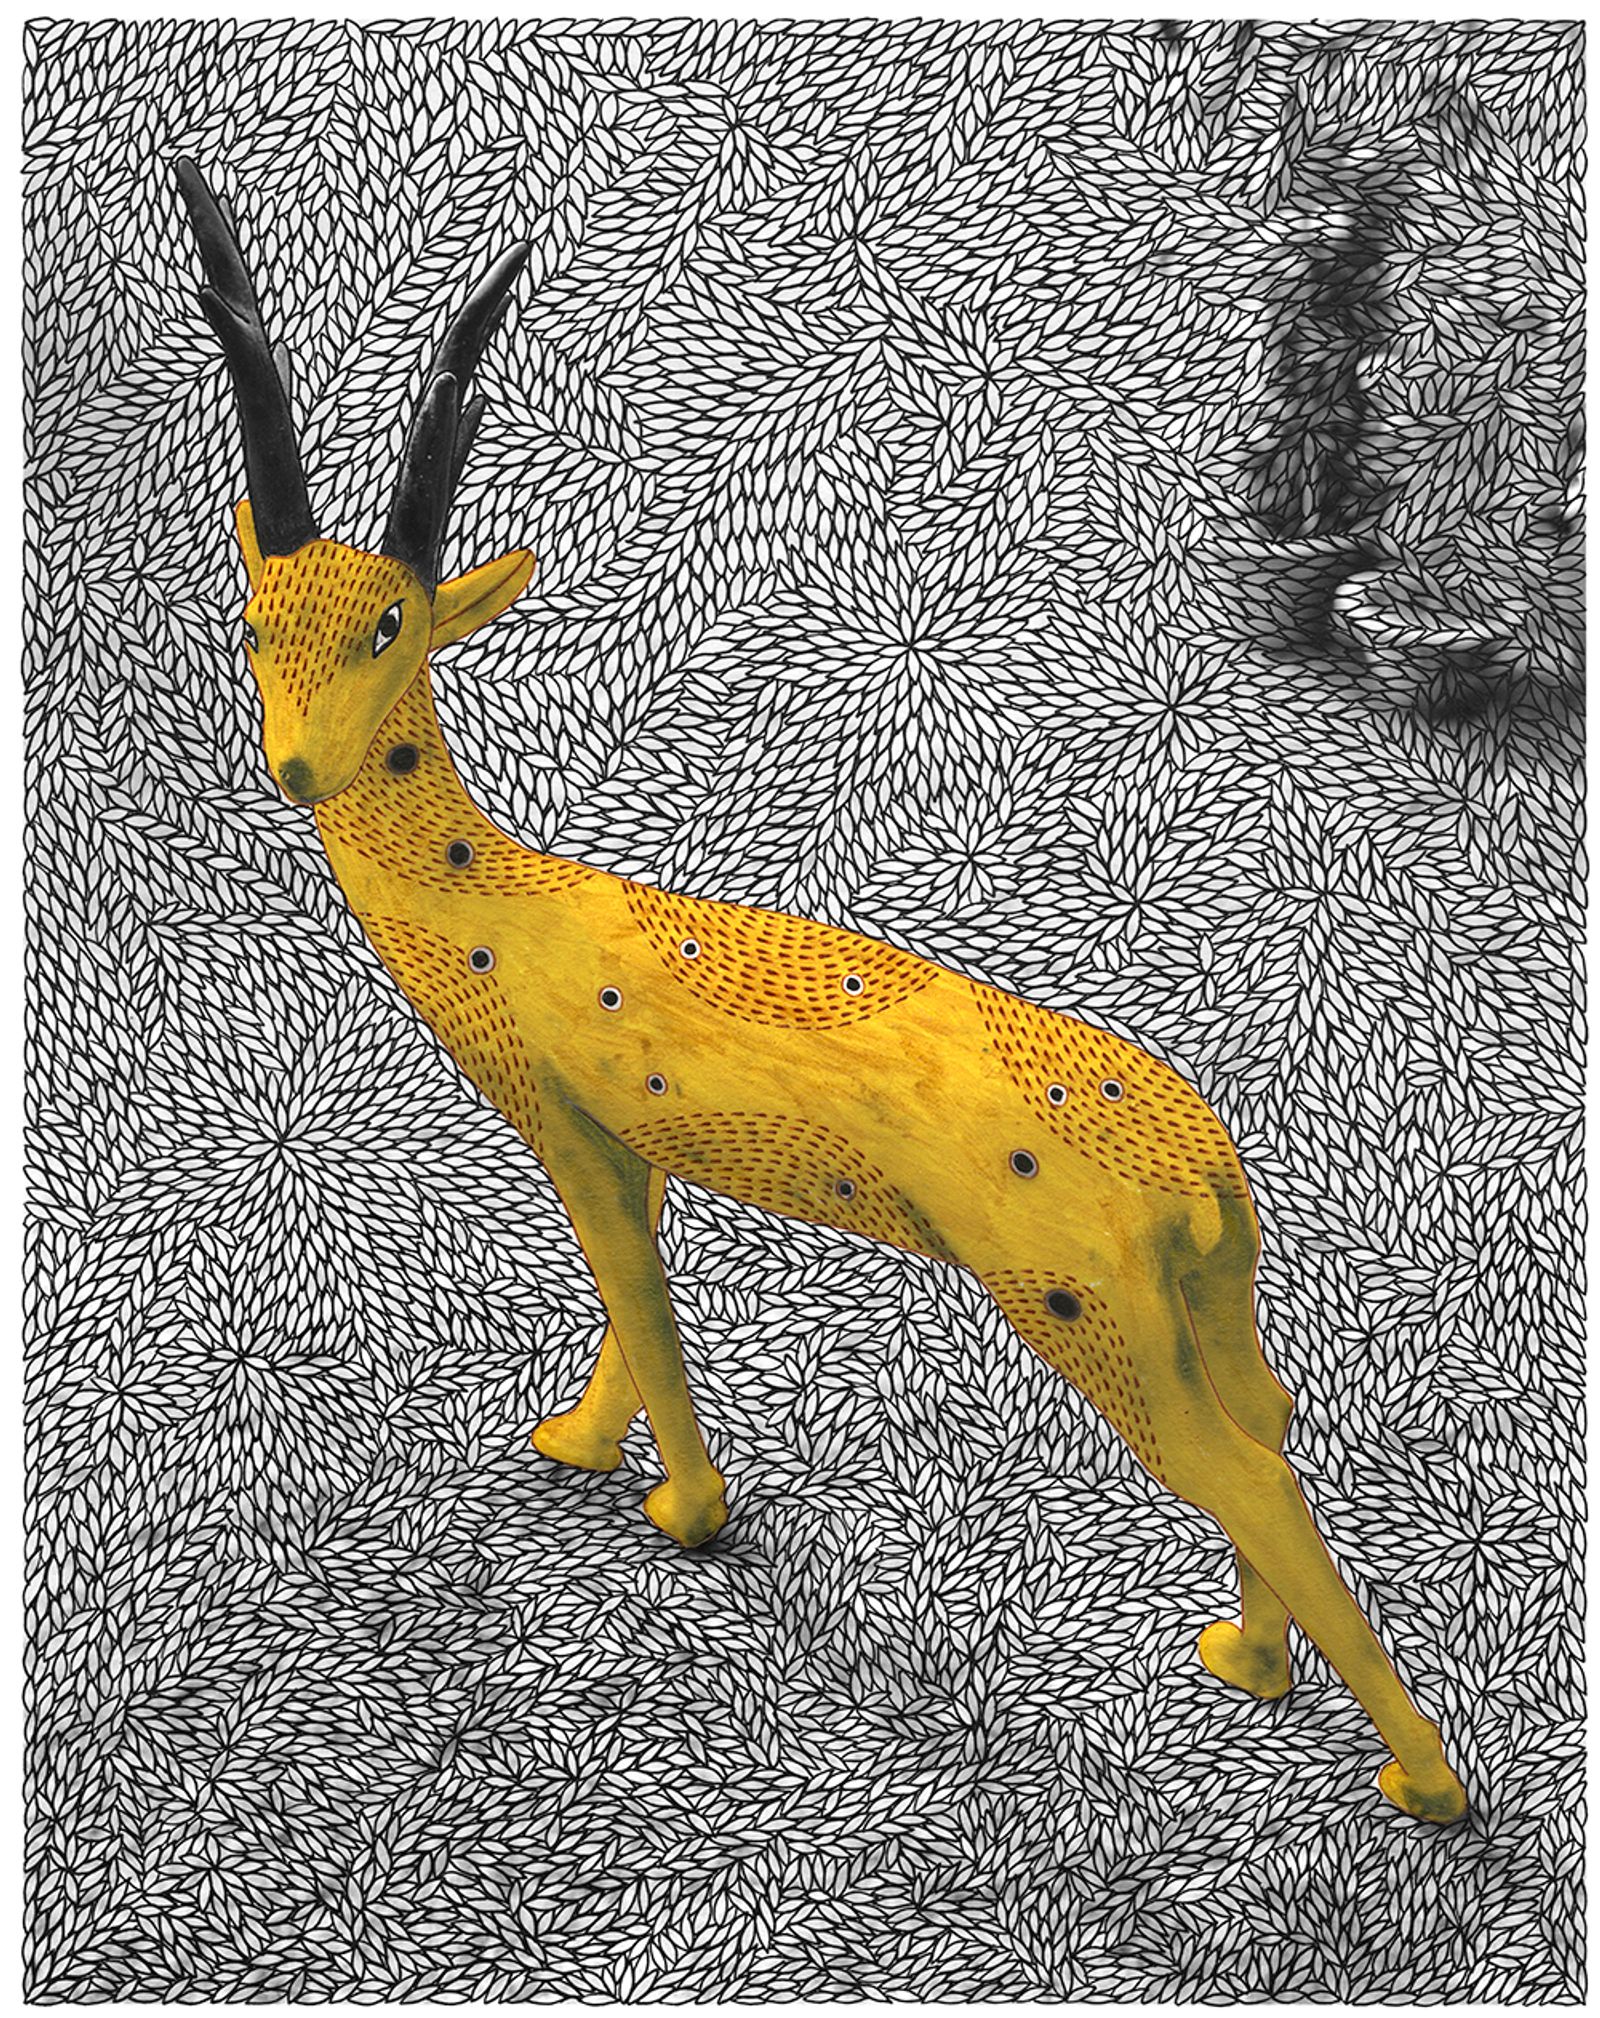 © Vasantha Yogananthan - The Golden Deer, Ayodhya, Uttar Pradesh, India, 2015 (Black and white inkjet print illustrated by Mahalaxmi & Shantanu Das)